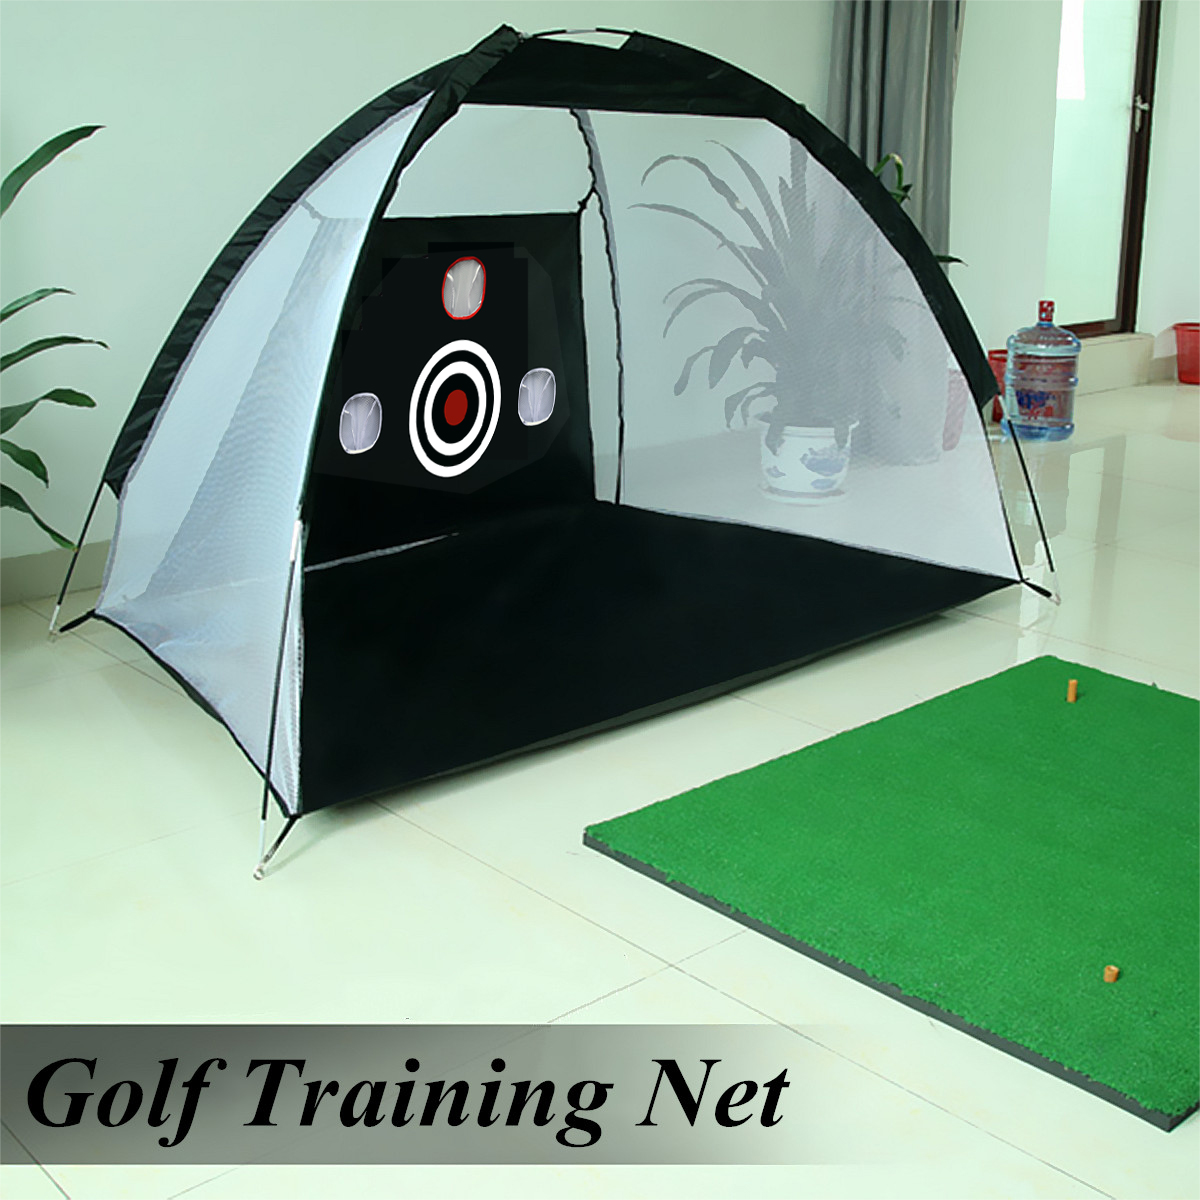 3m-Adults-Kids-Folding-Portable-Golf-Training-Aids-Cage-Tent-Net-Mat-Tee-Outdoor-Trip-Indoor-Golf-Cl-1662971-2